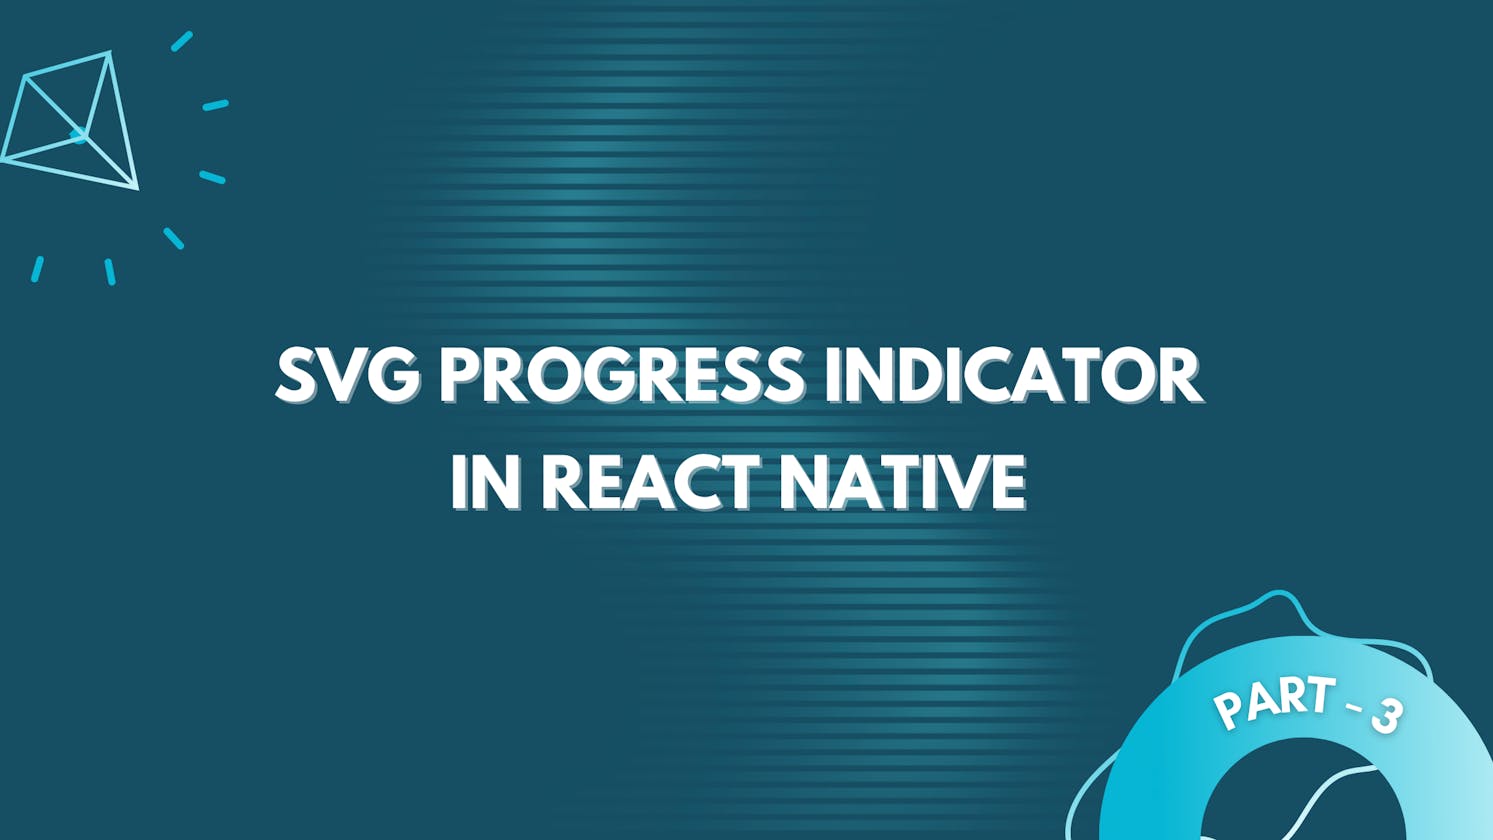 SVG progress indicator in react native - Part 3